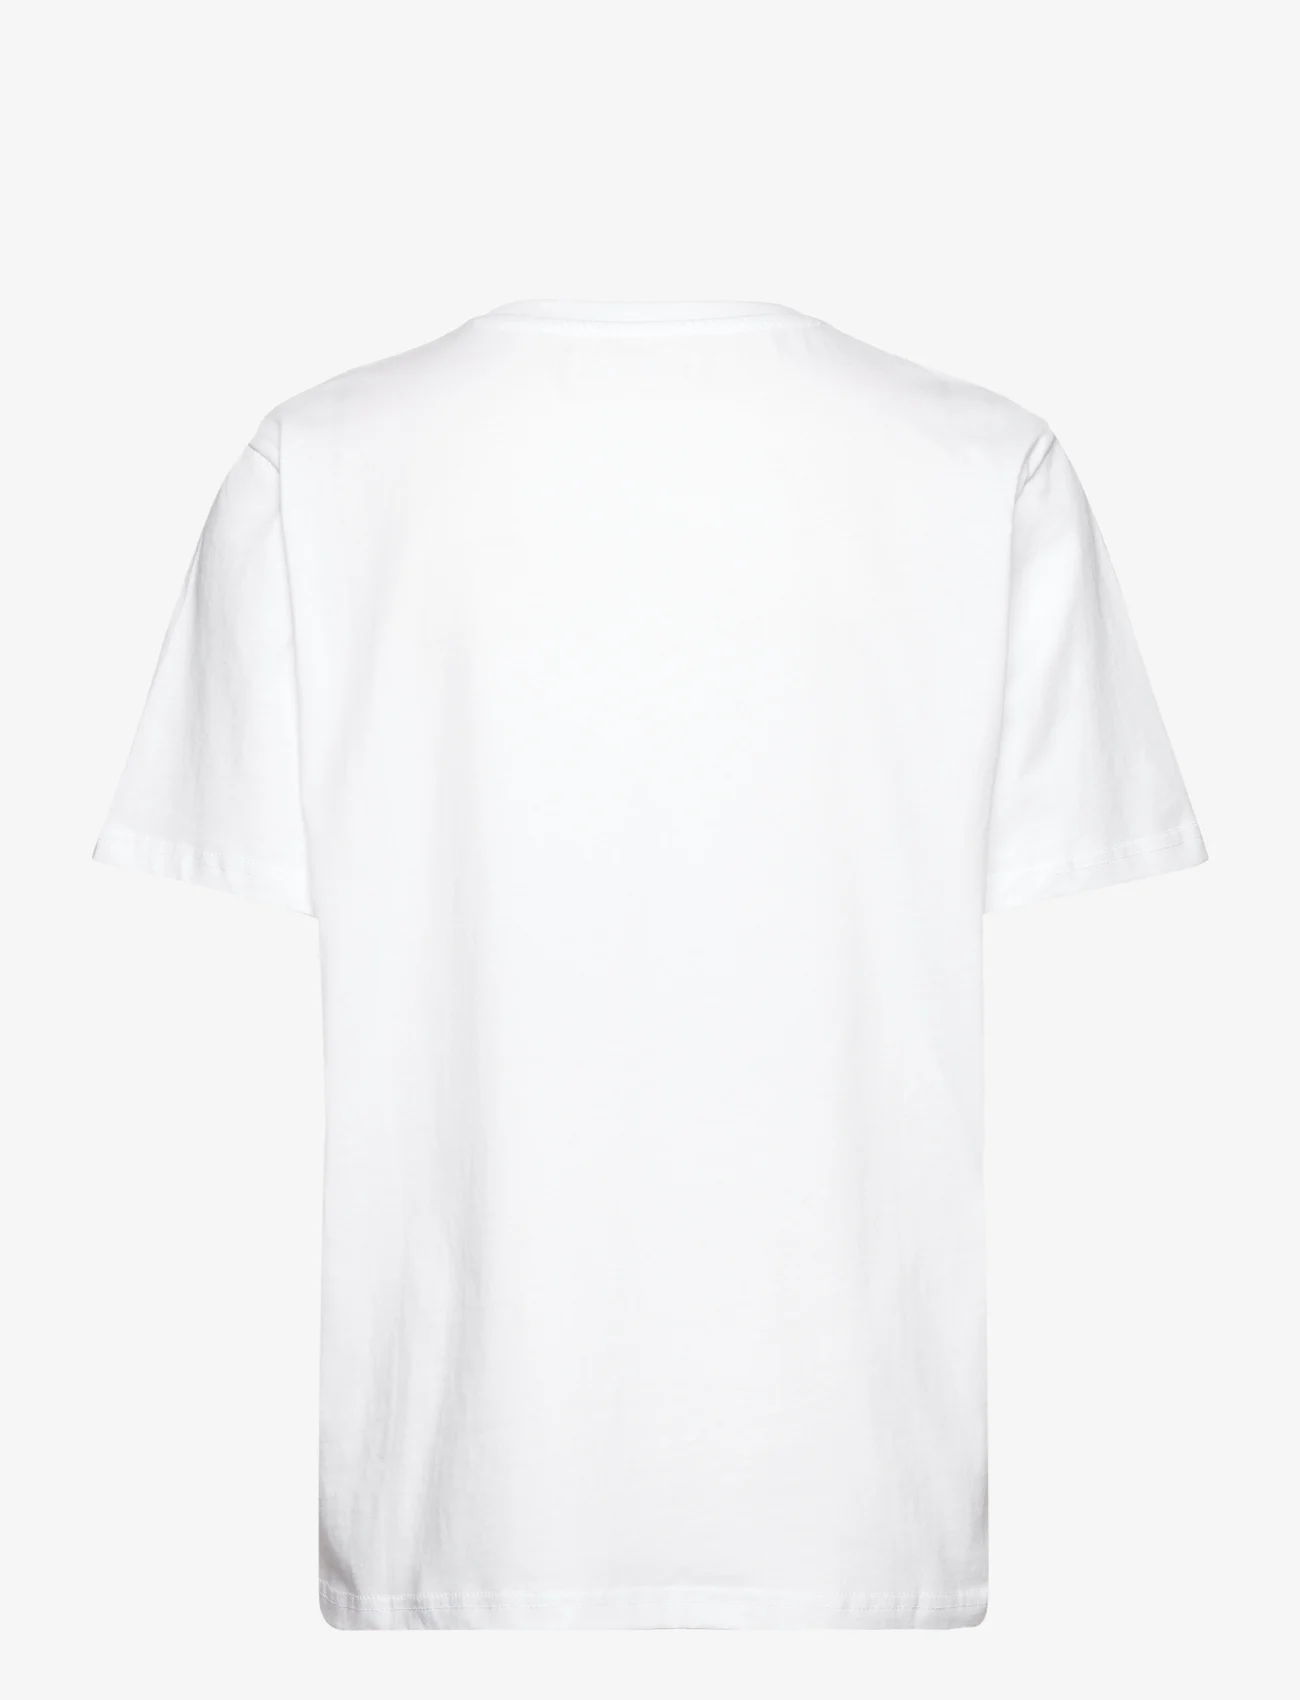 Sofie Schnoor - T-shirt - marškinėliai - white w mint - 1